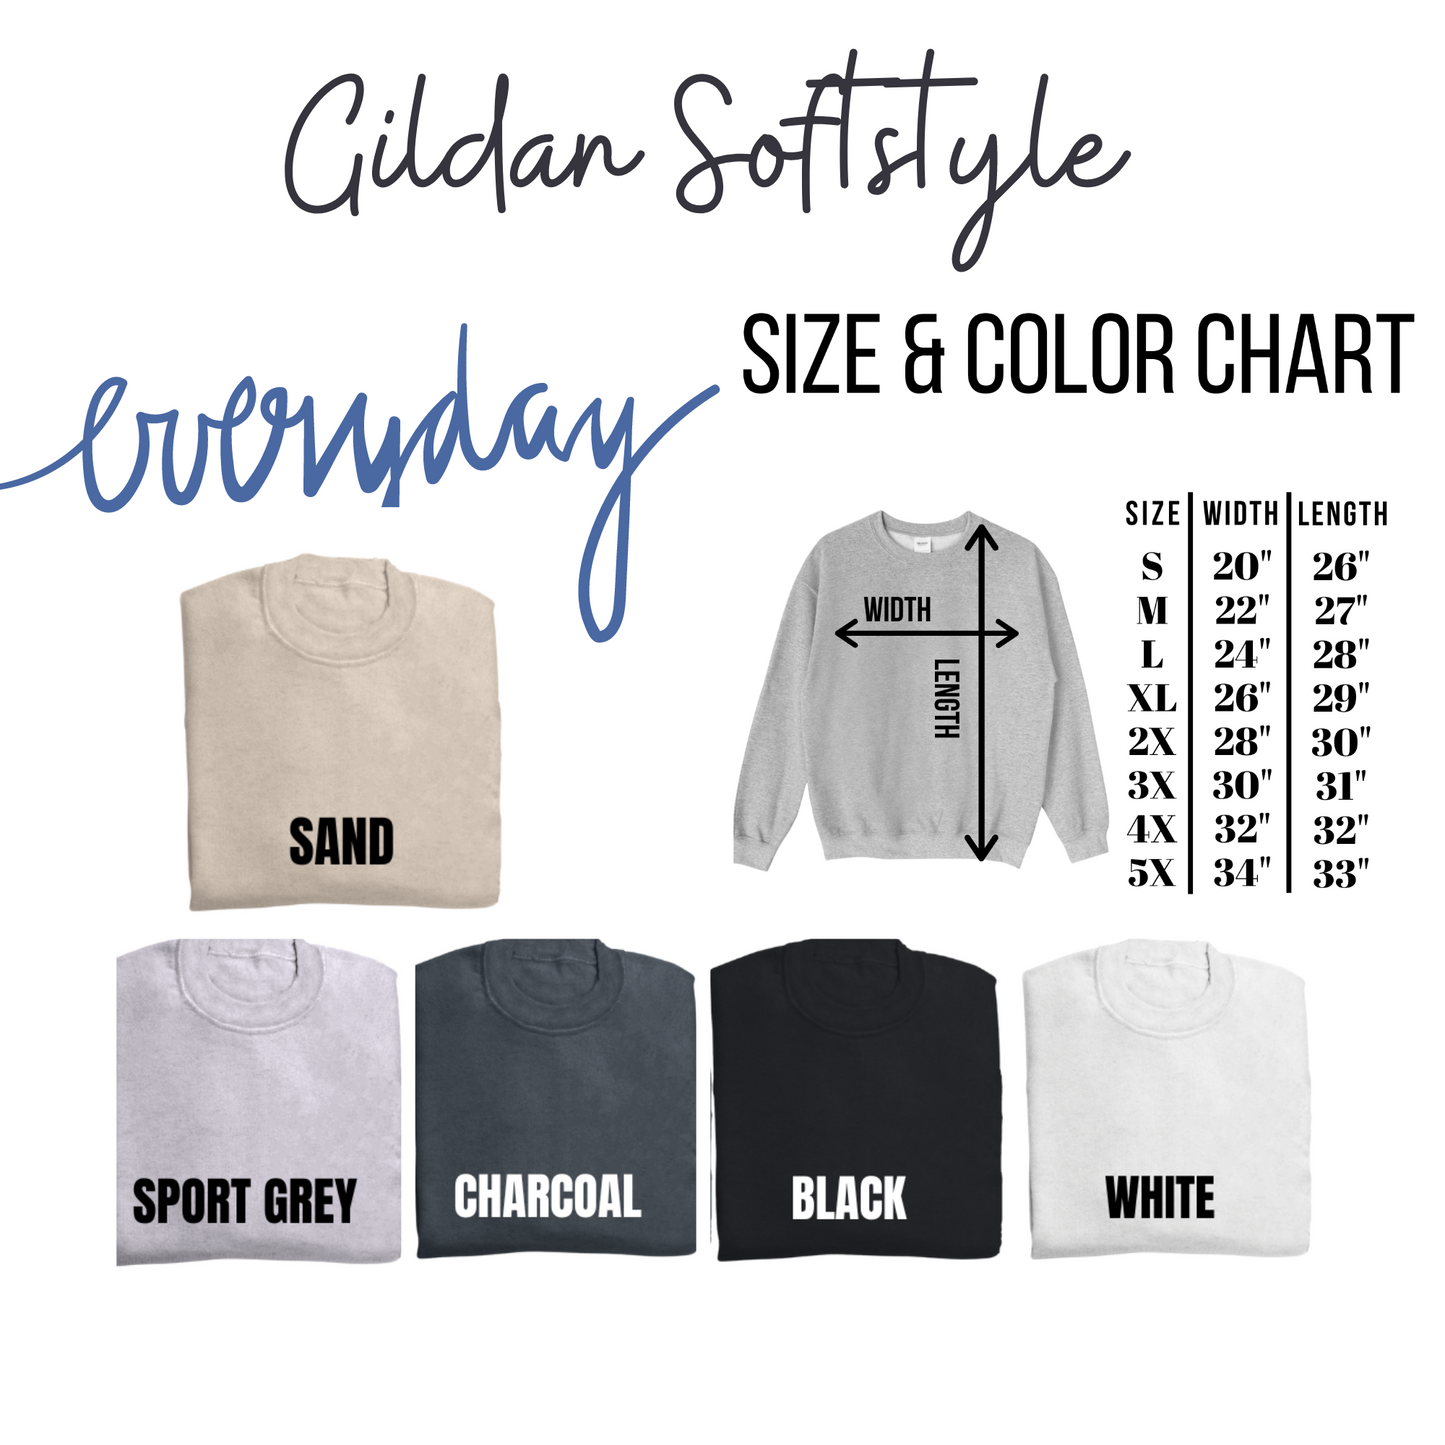 Ghost Doodle Gildan Softstyle T-shirt or Sweatshirt